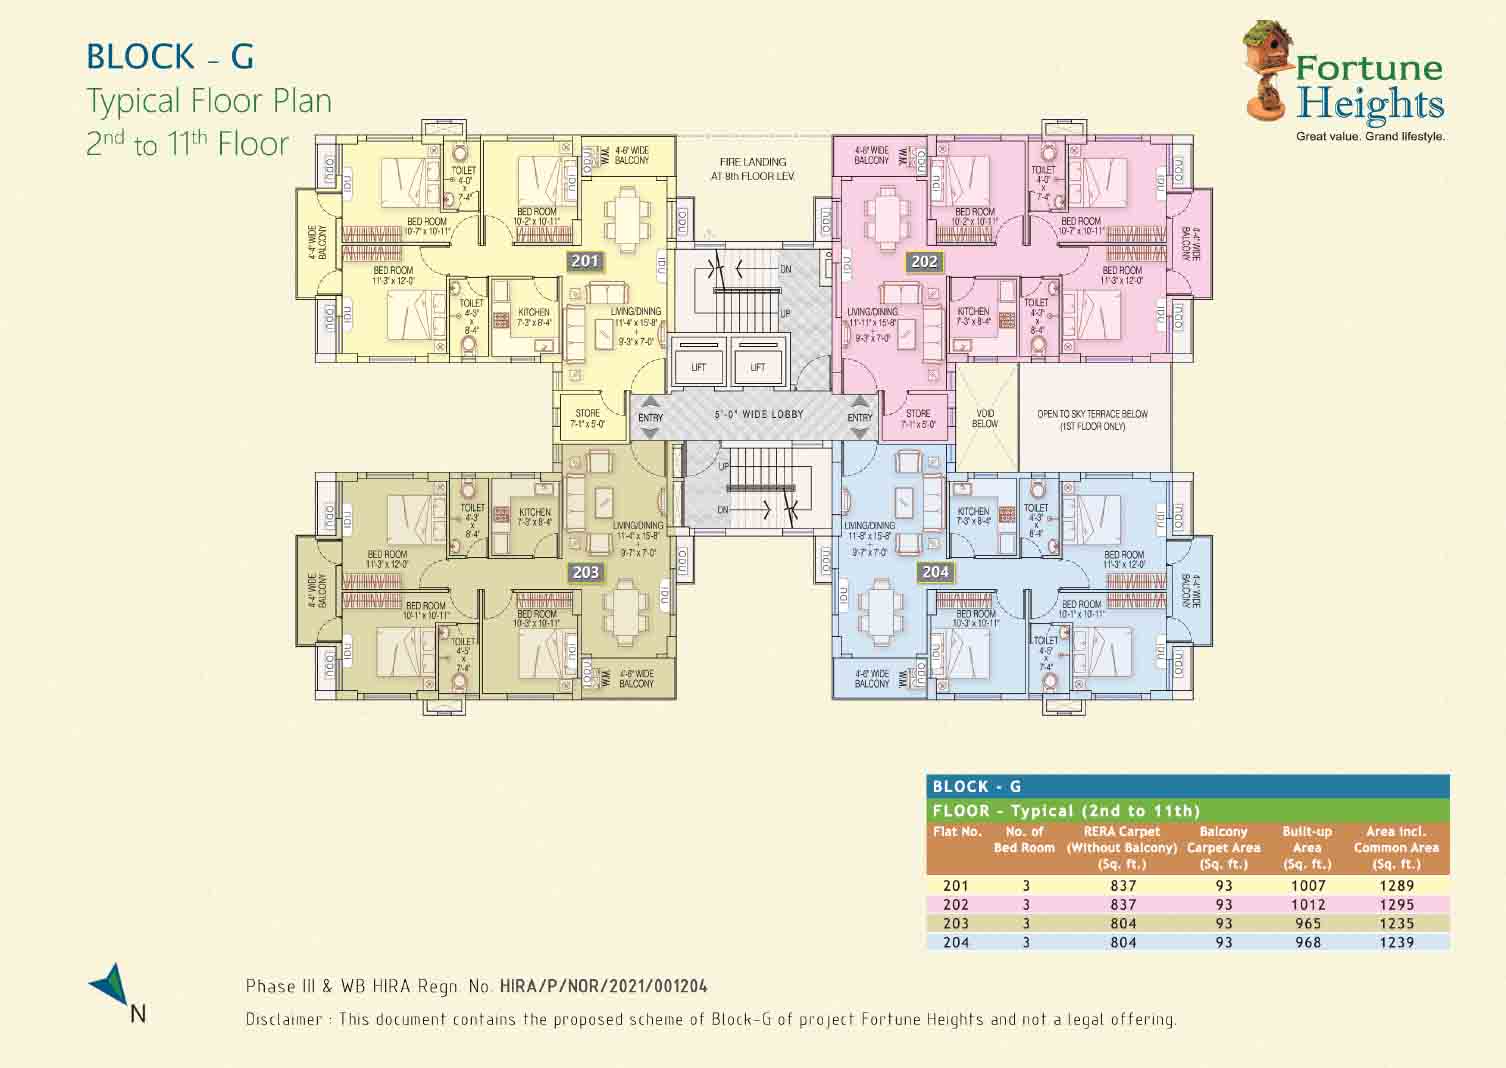 1629208009block-g-typical-floor-plan-2nd-to-11th-floor5486